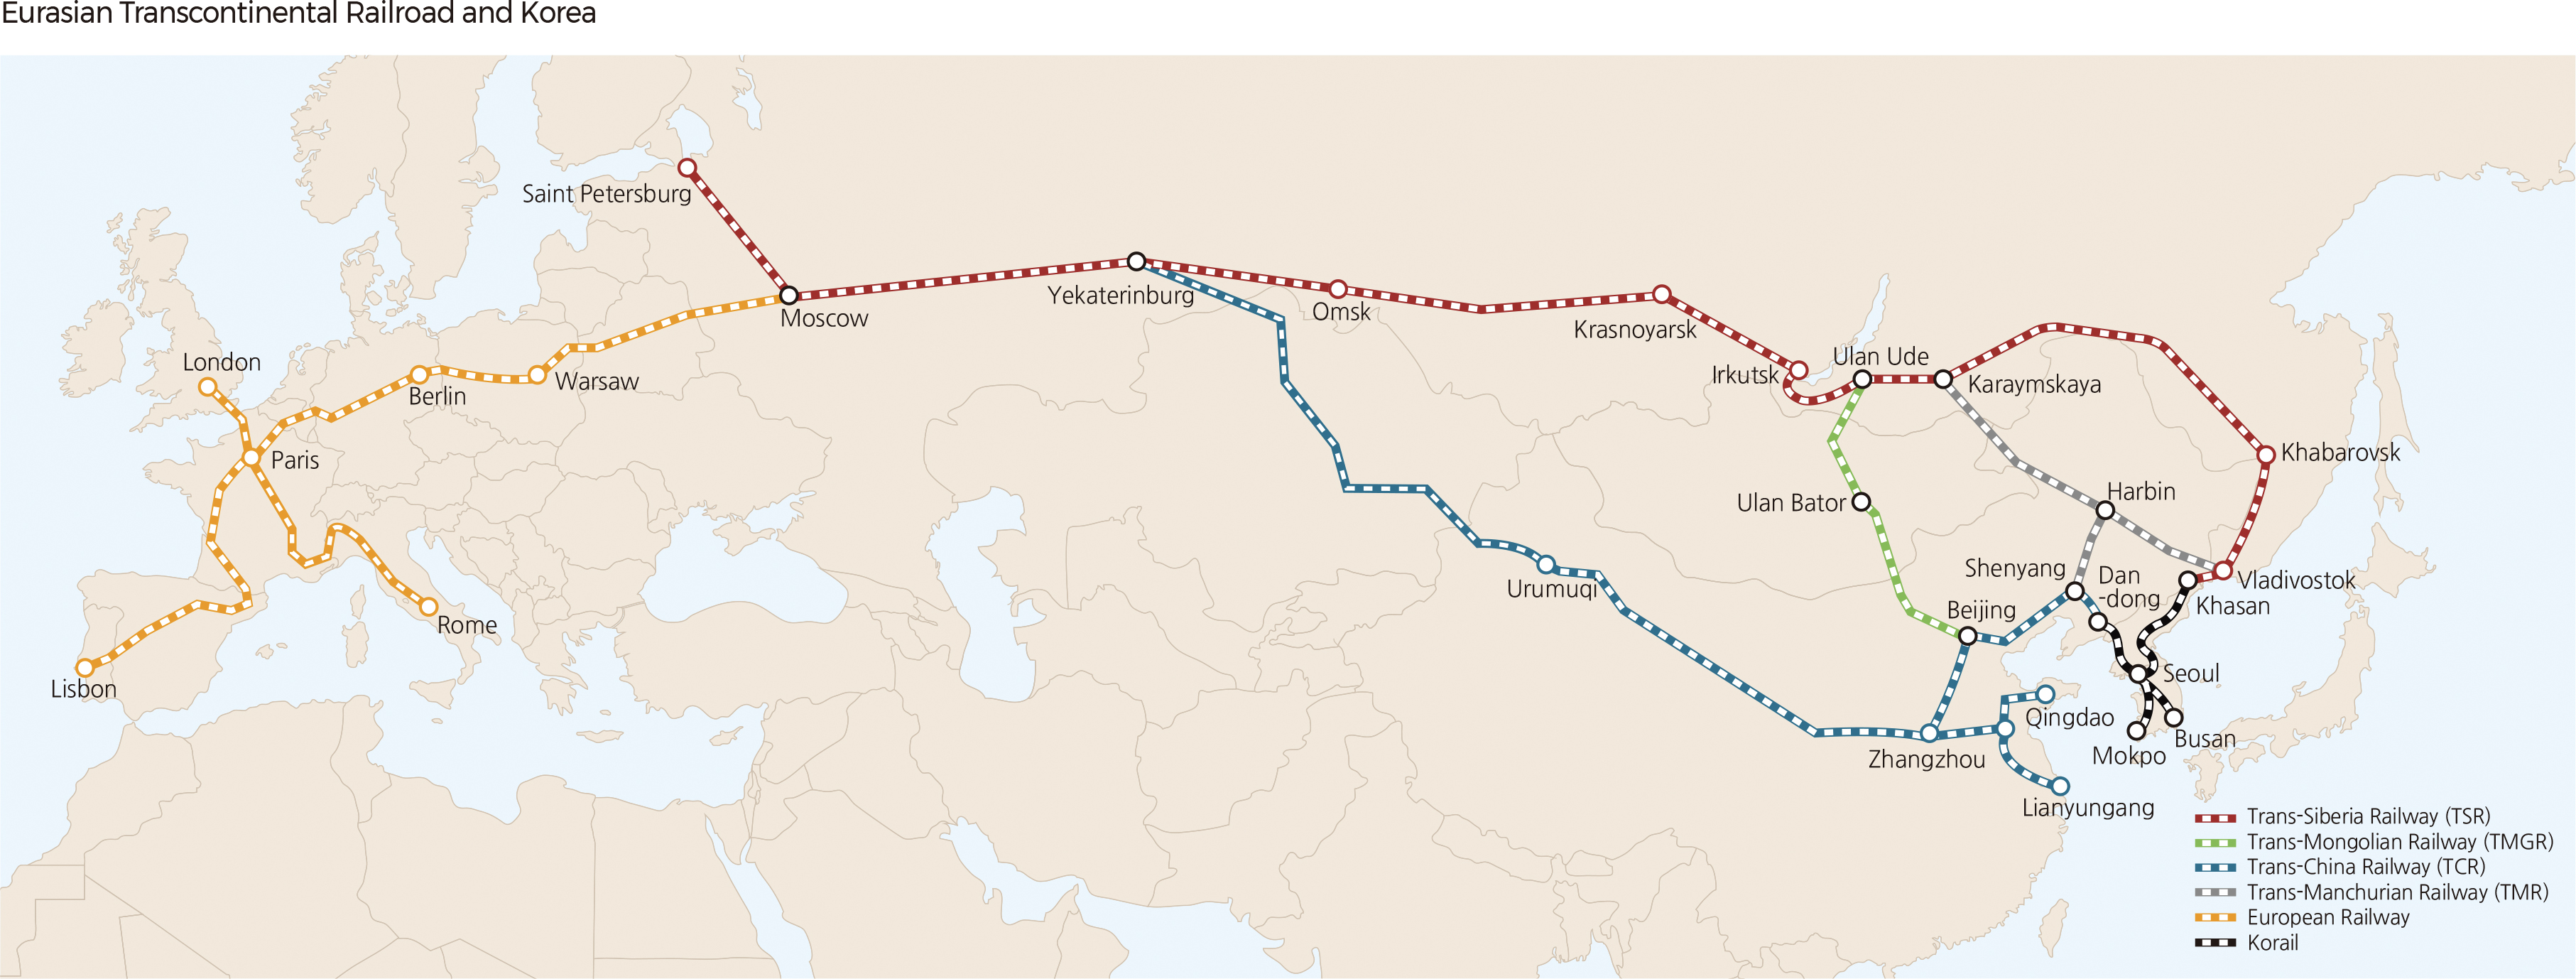 Eurasian Transcontinental Railroad and Korea